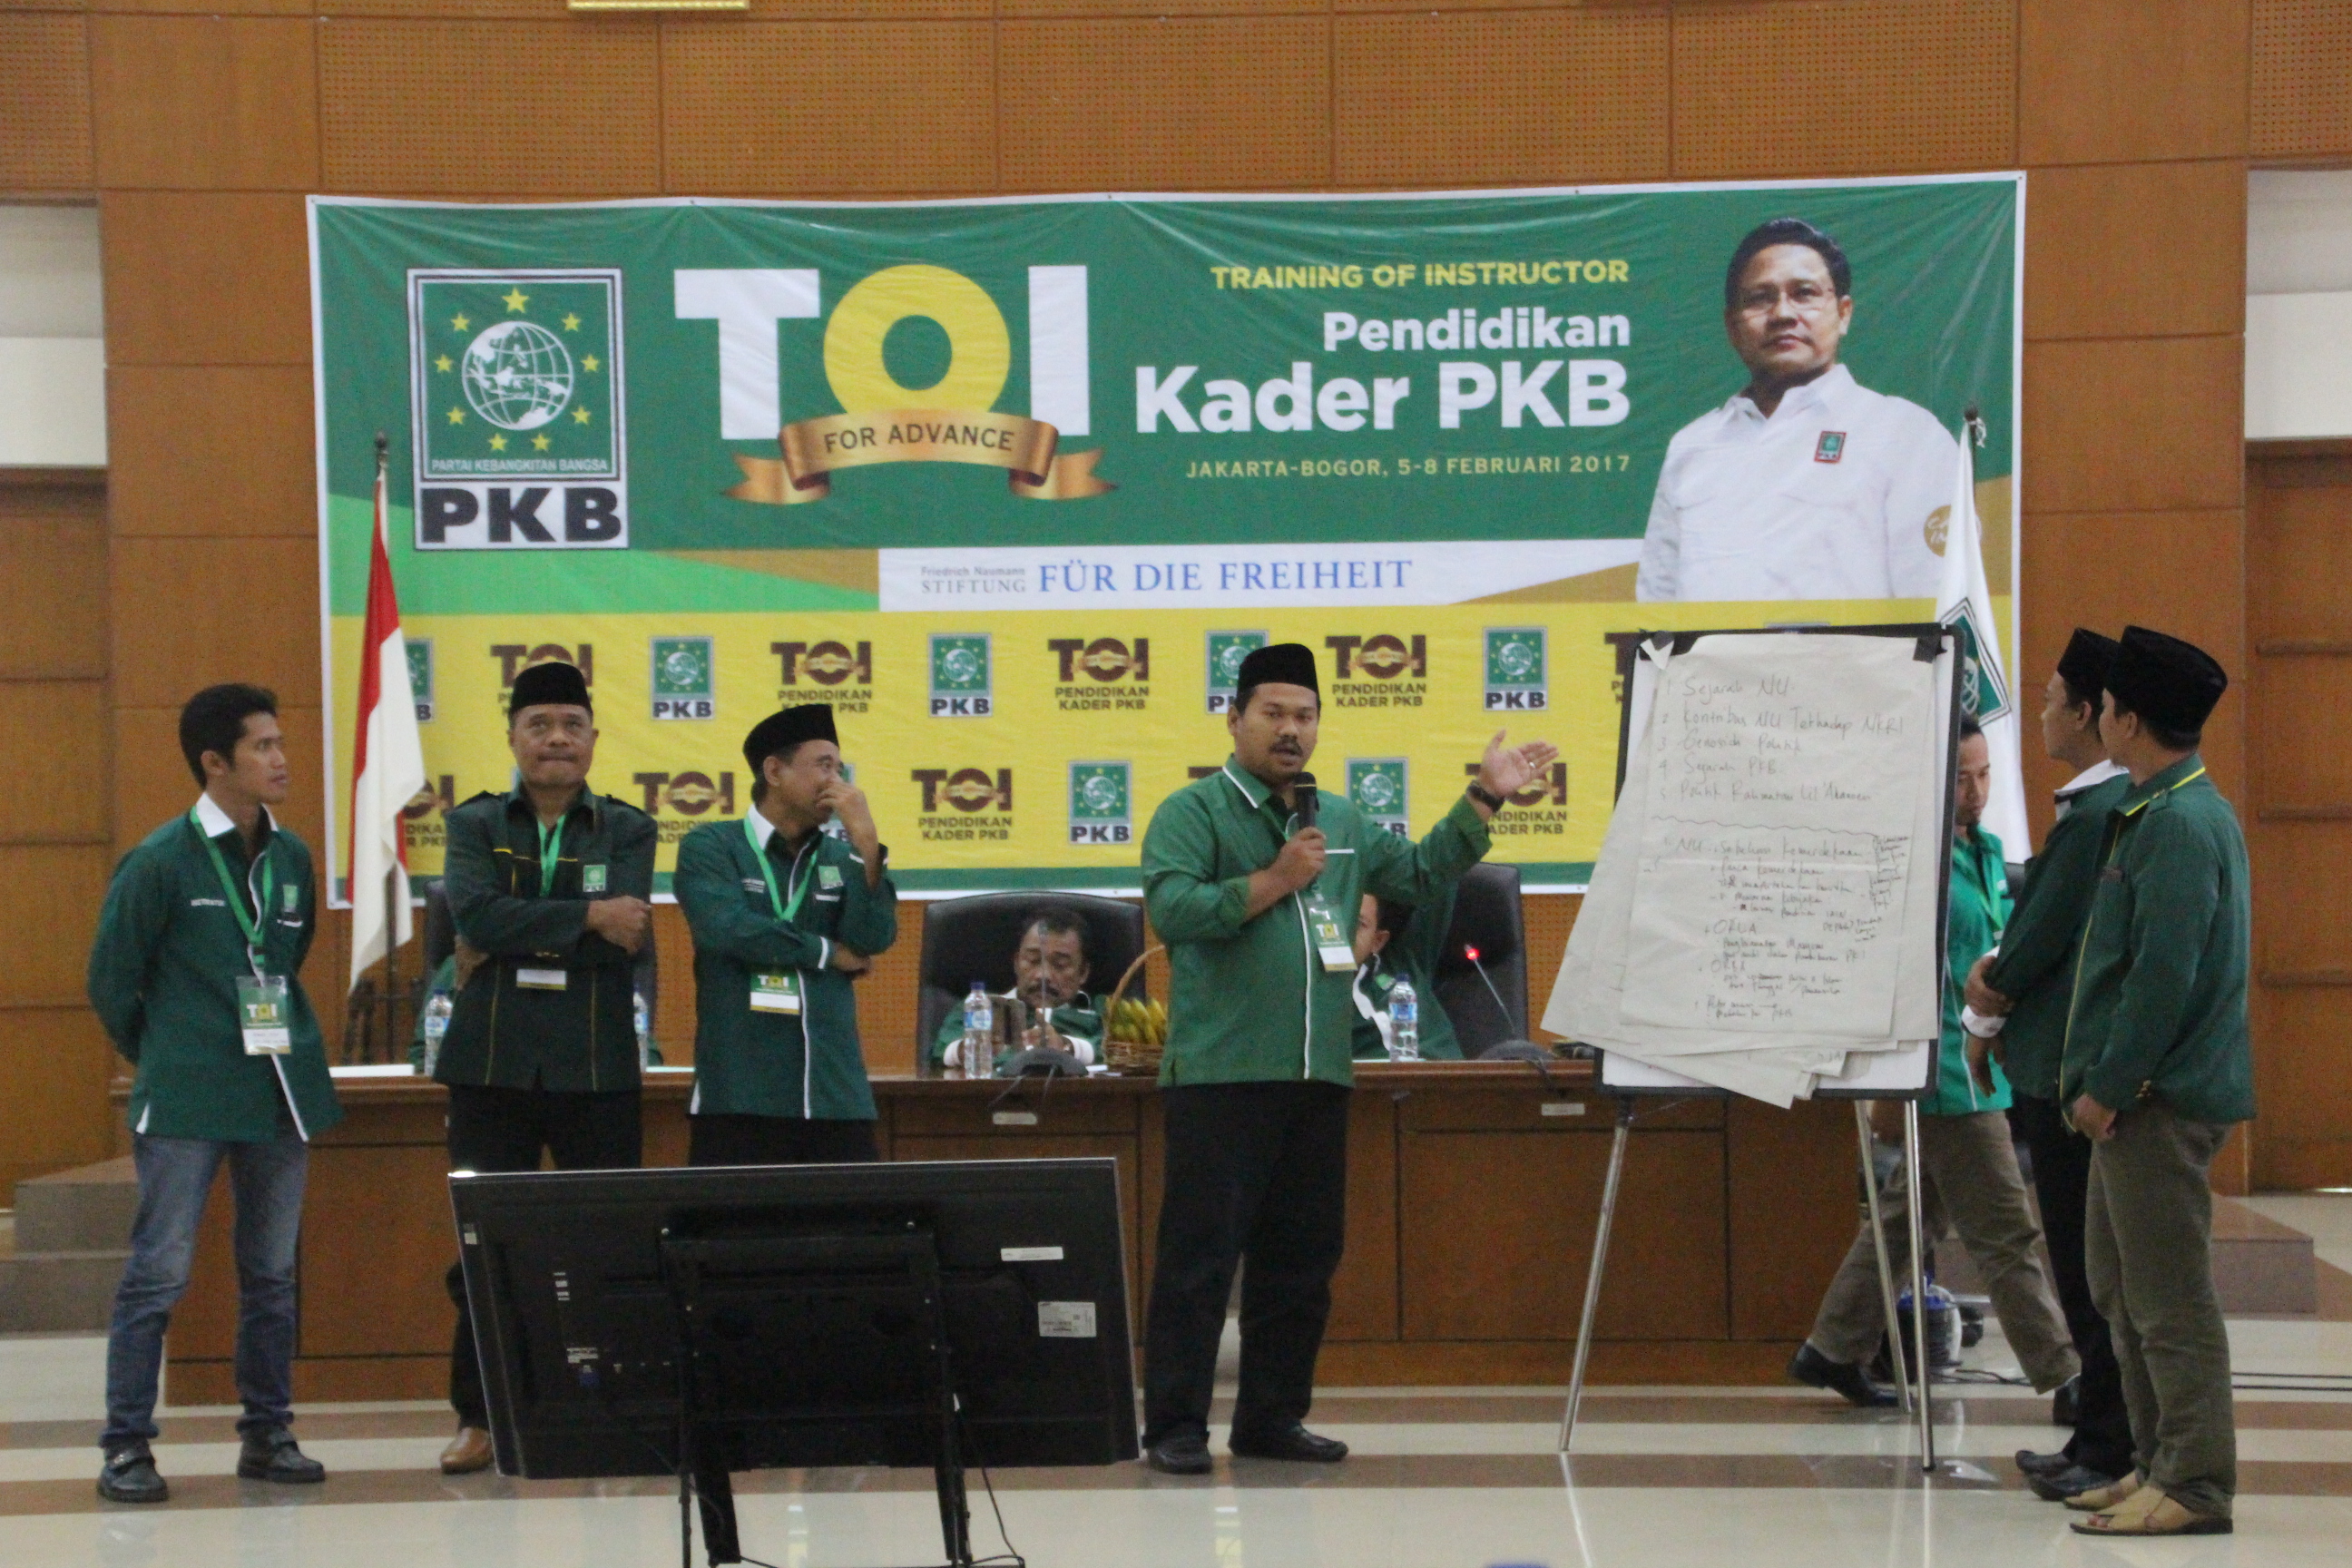 Training of Instructor, Pendidikan Kader PKB, 